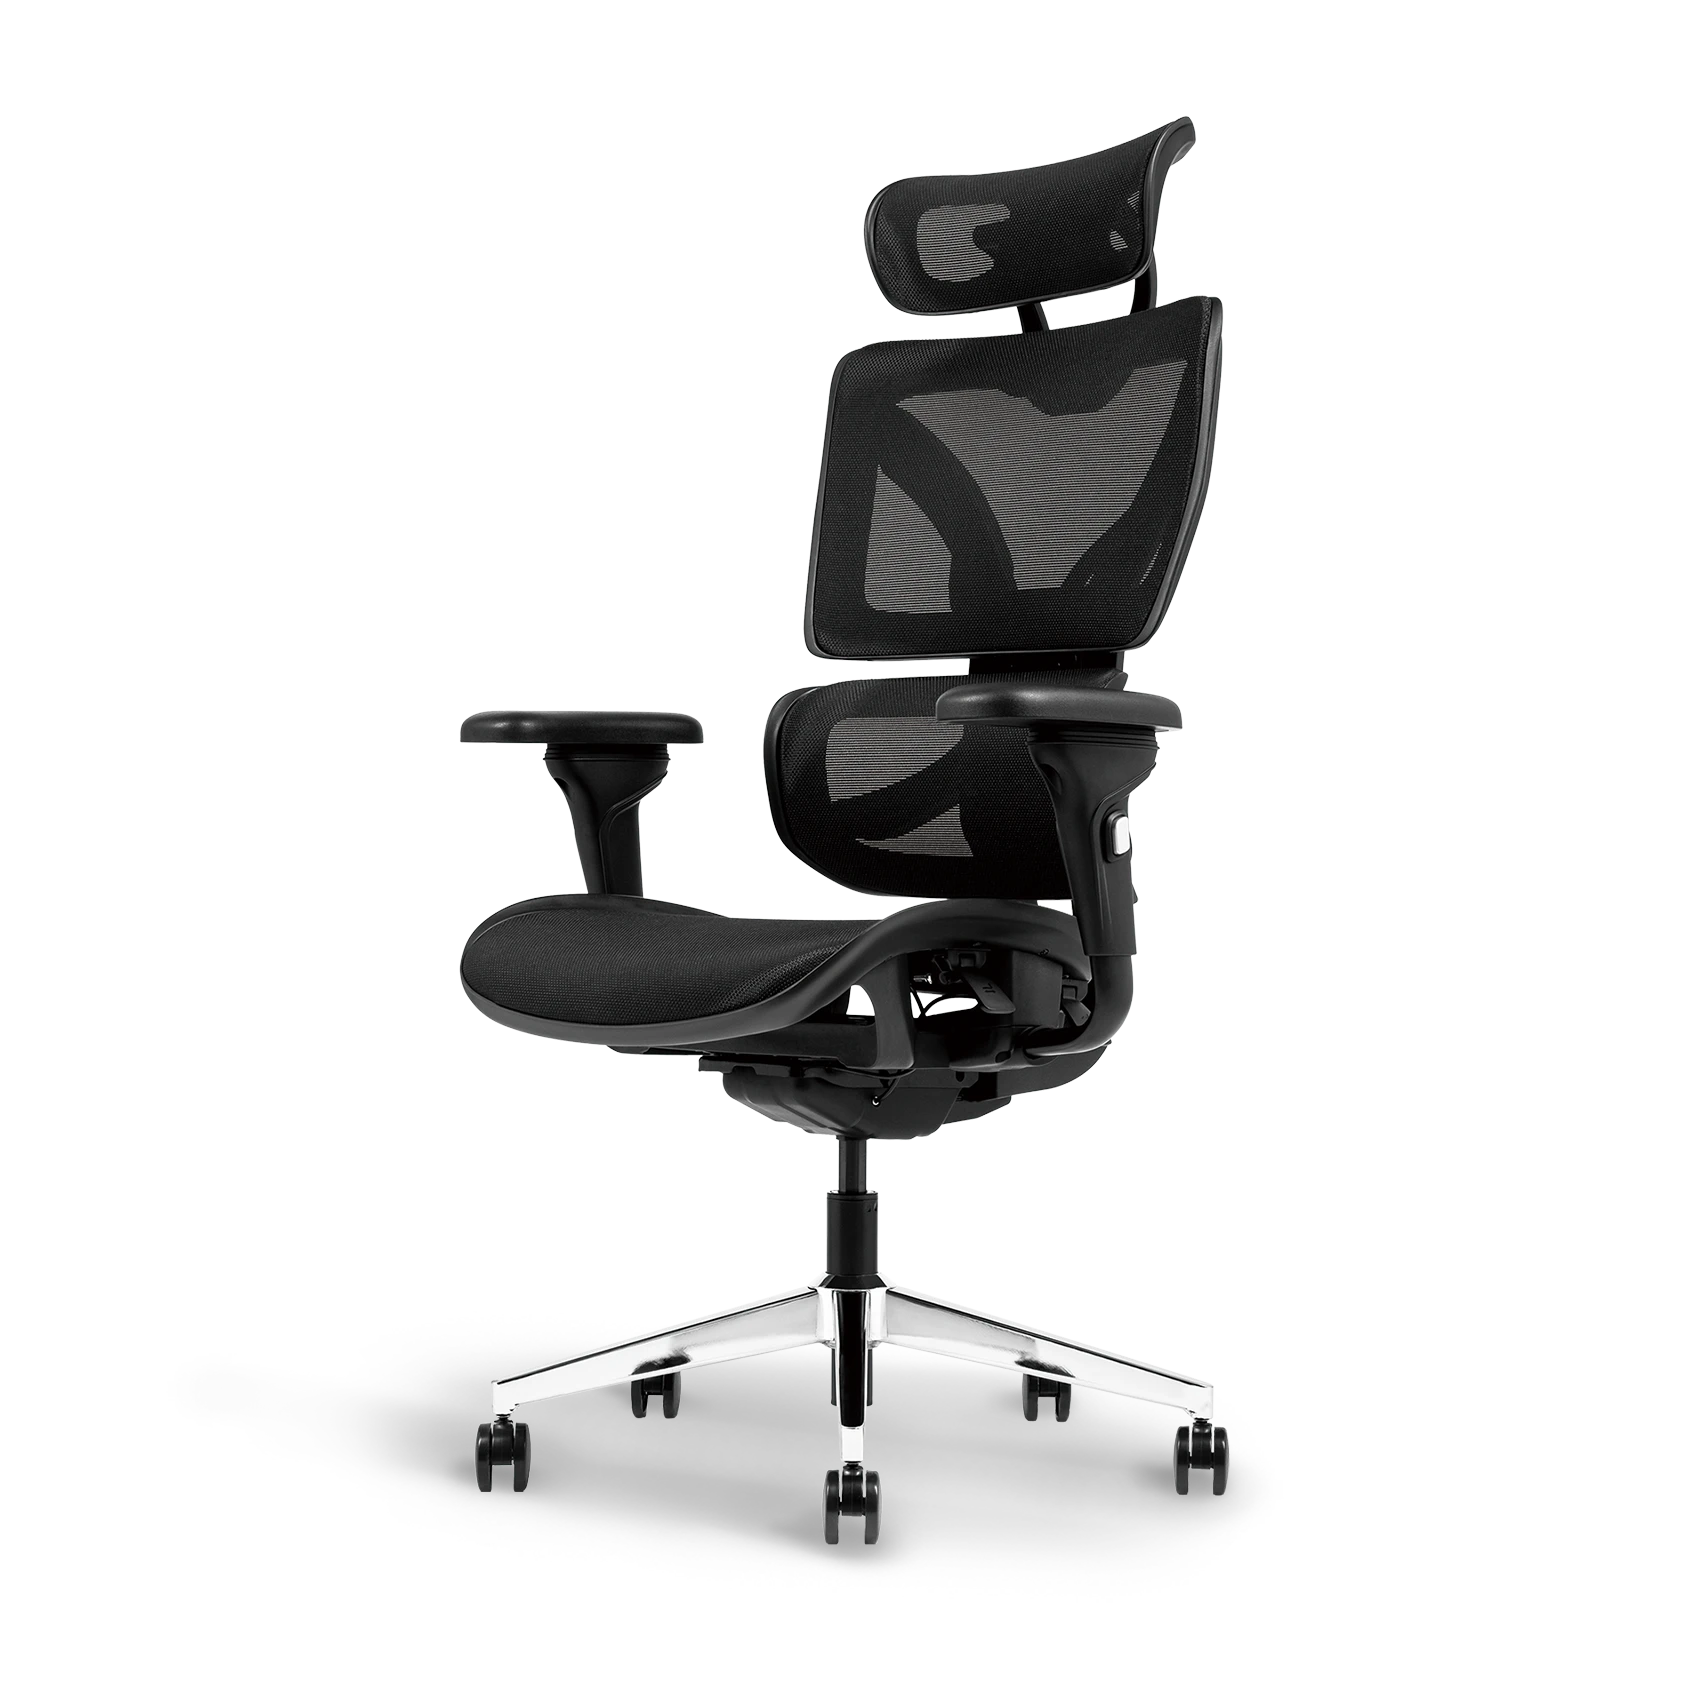 Ayla Ergonomic Chair in sleek black design offering advanced lumbar support and adjustable armrests for superior comfort.